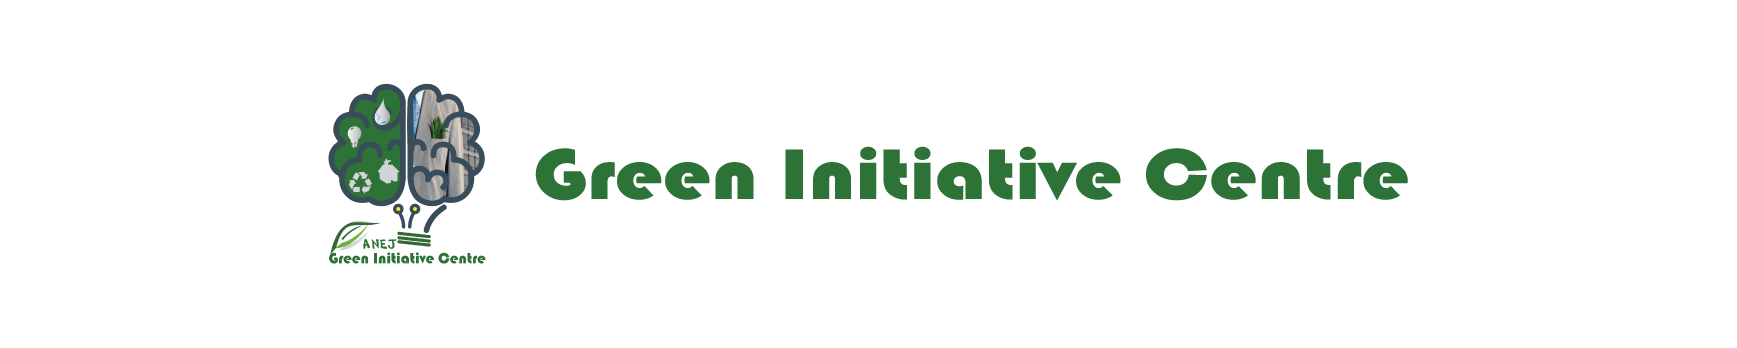 Green Initiative Centre